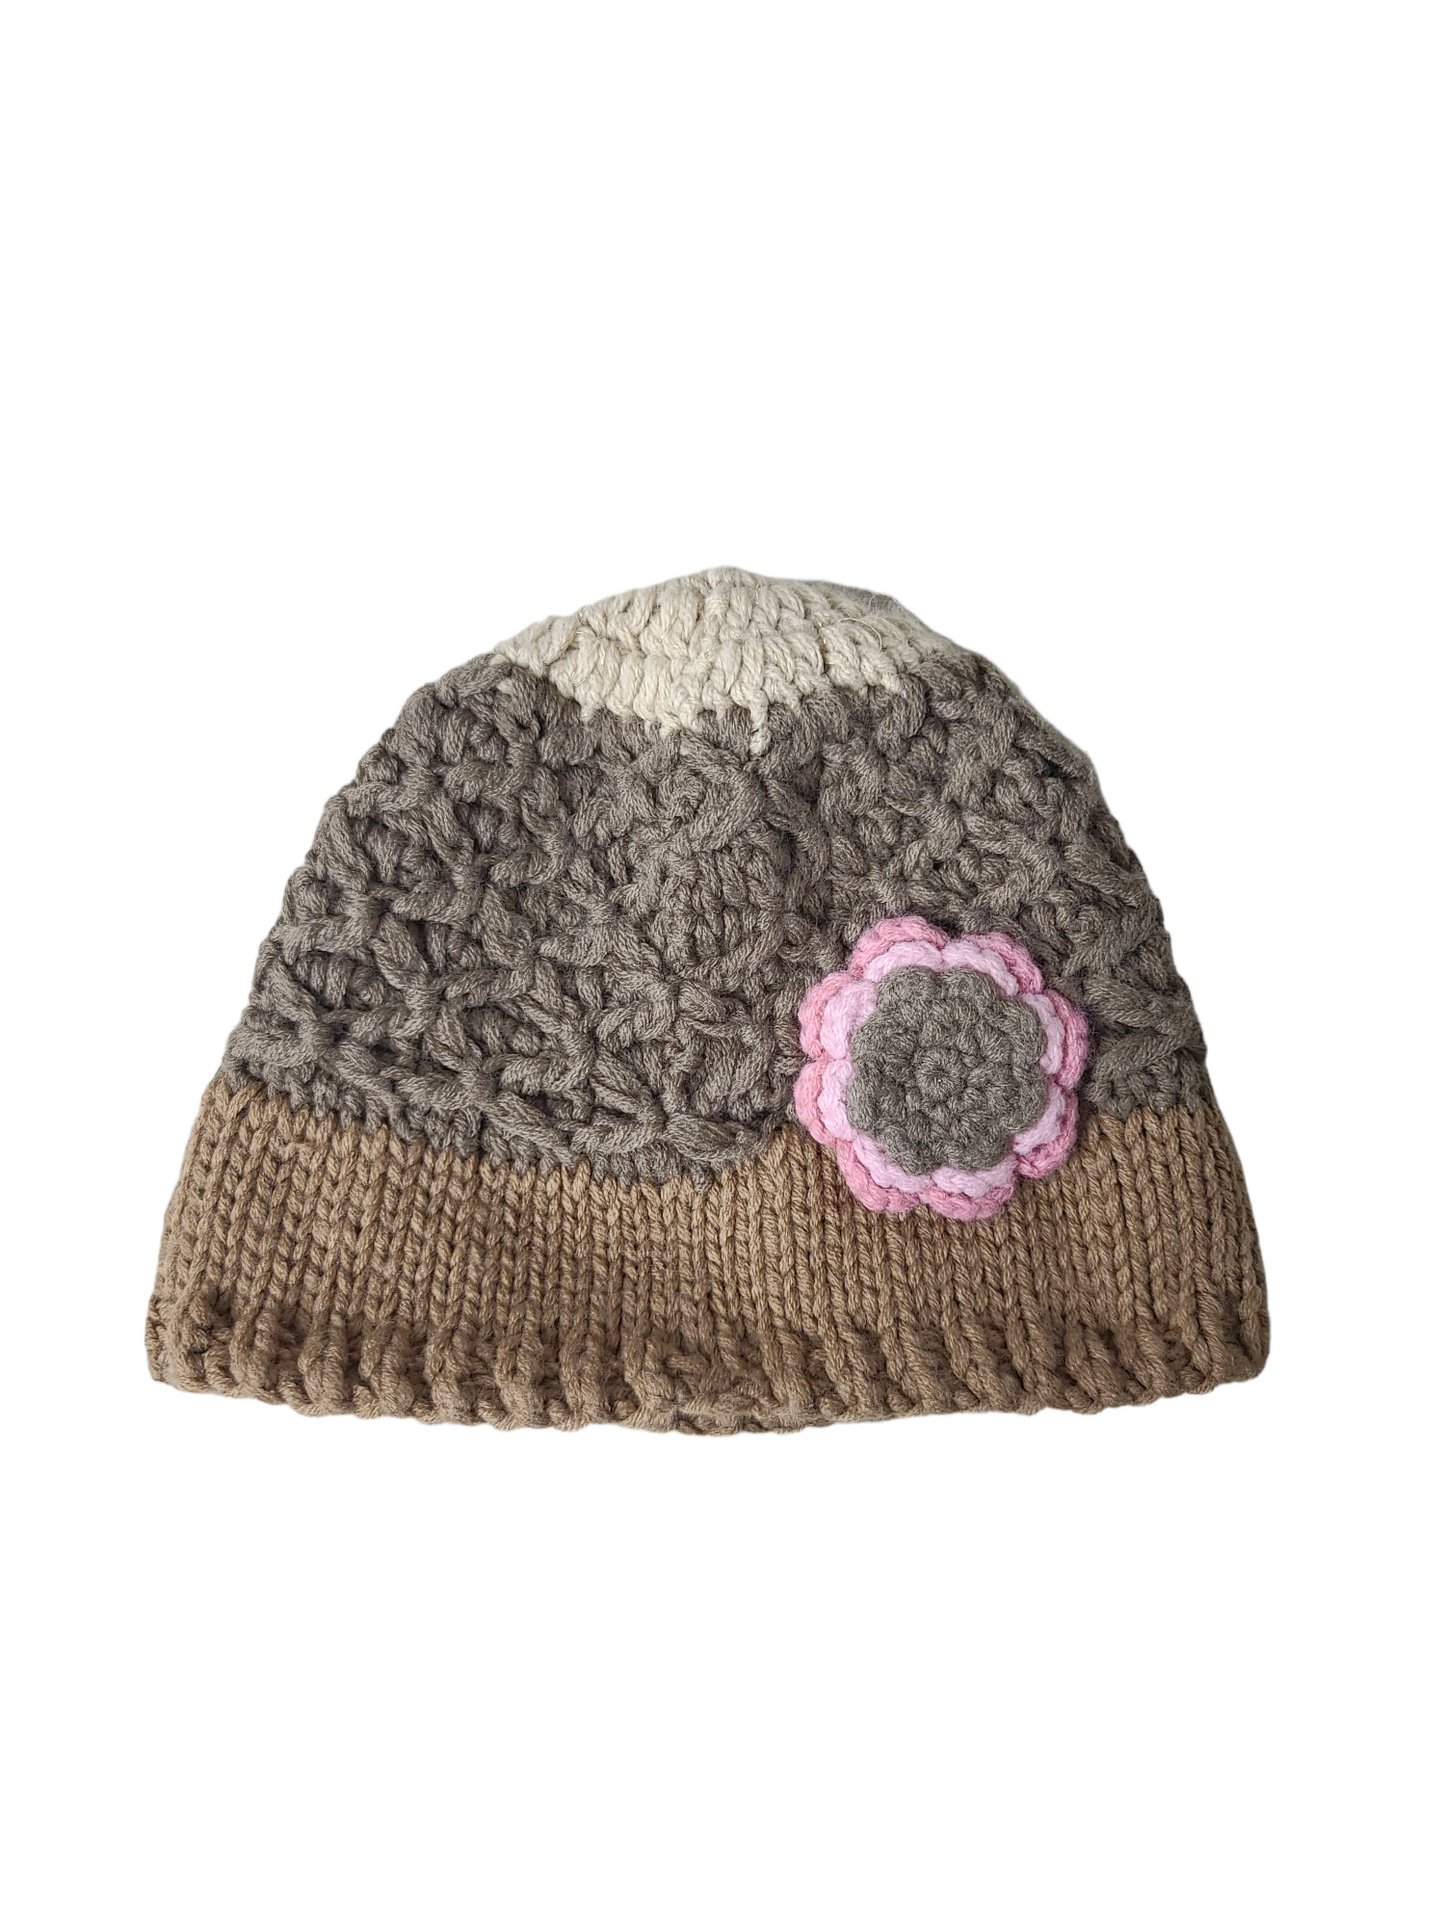 Bonnet fairygrunge kaki vintage y2k forest bohem fairycore crochet knit